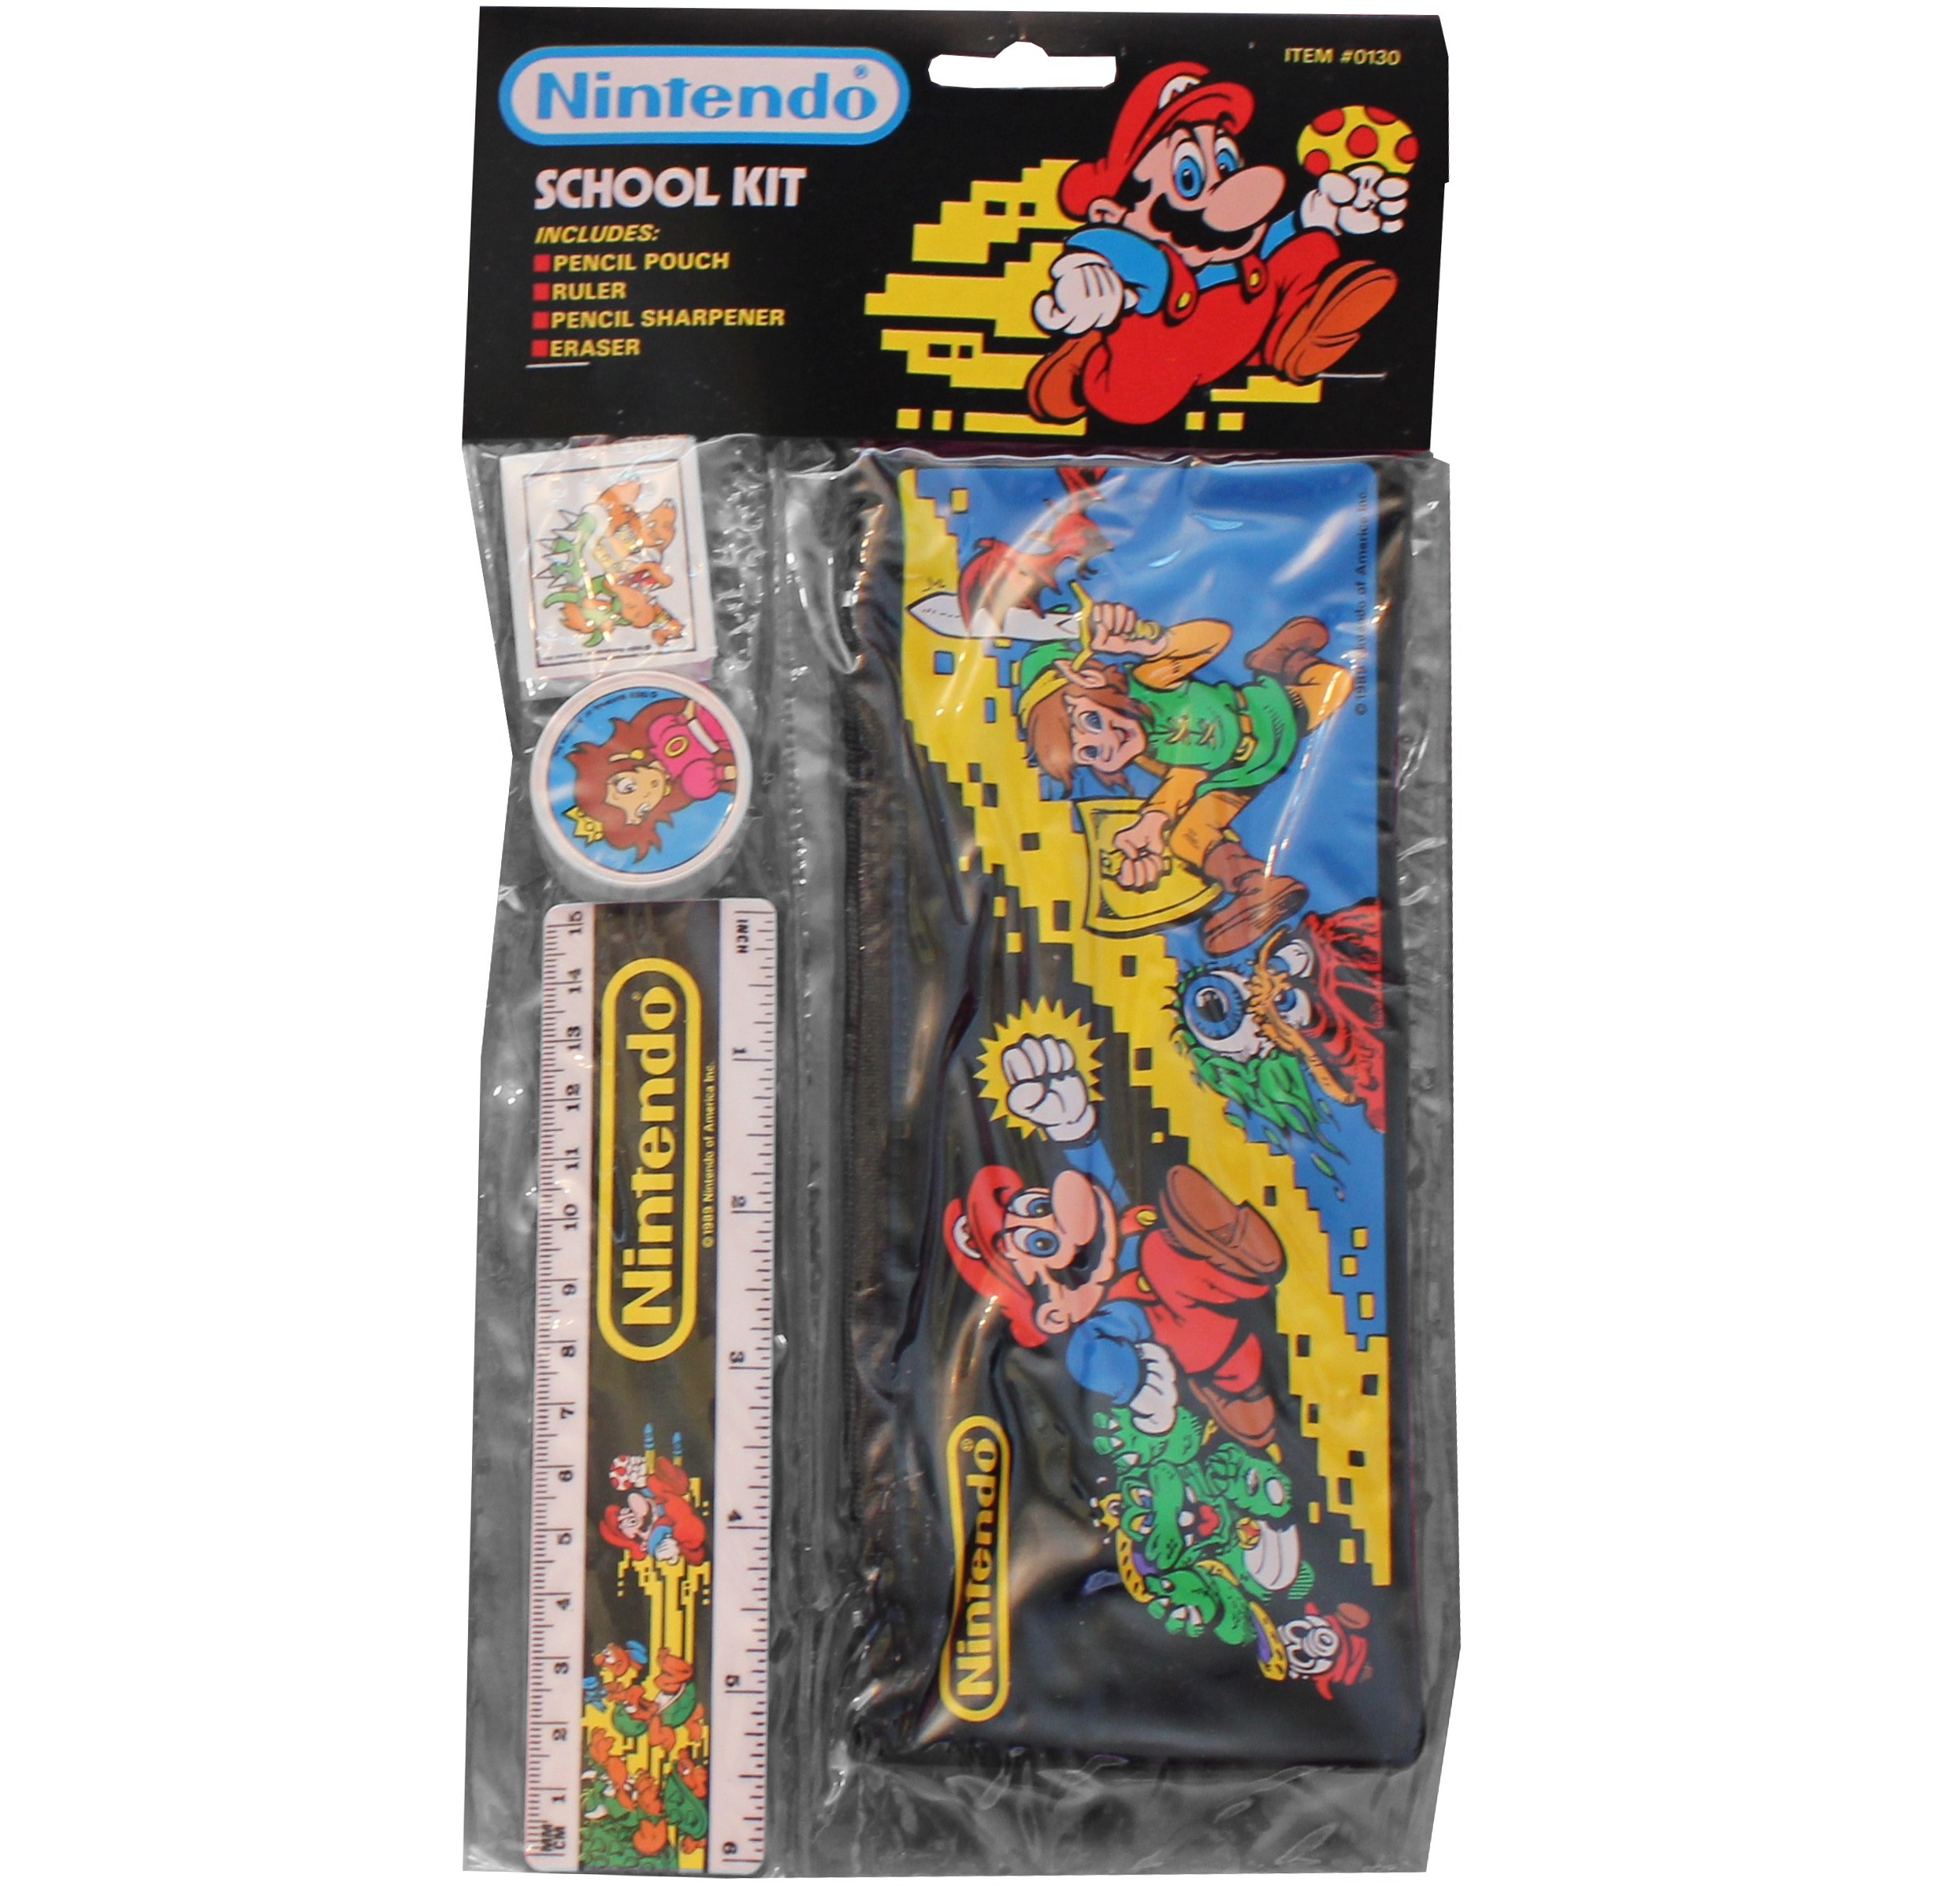 School Kit (Mario and Link pencil case), USA 1989.